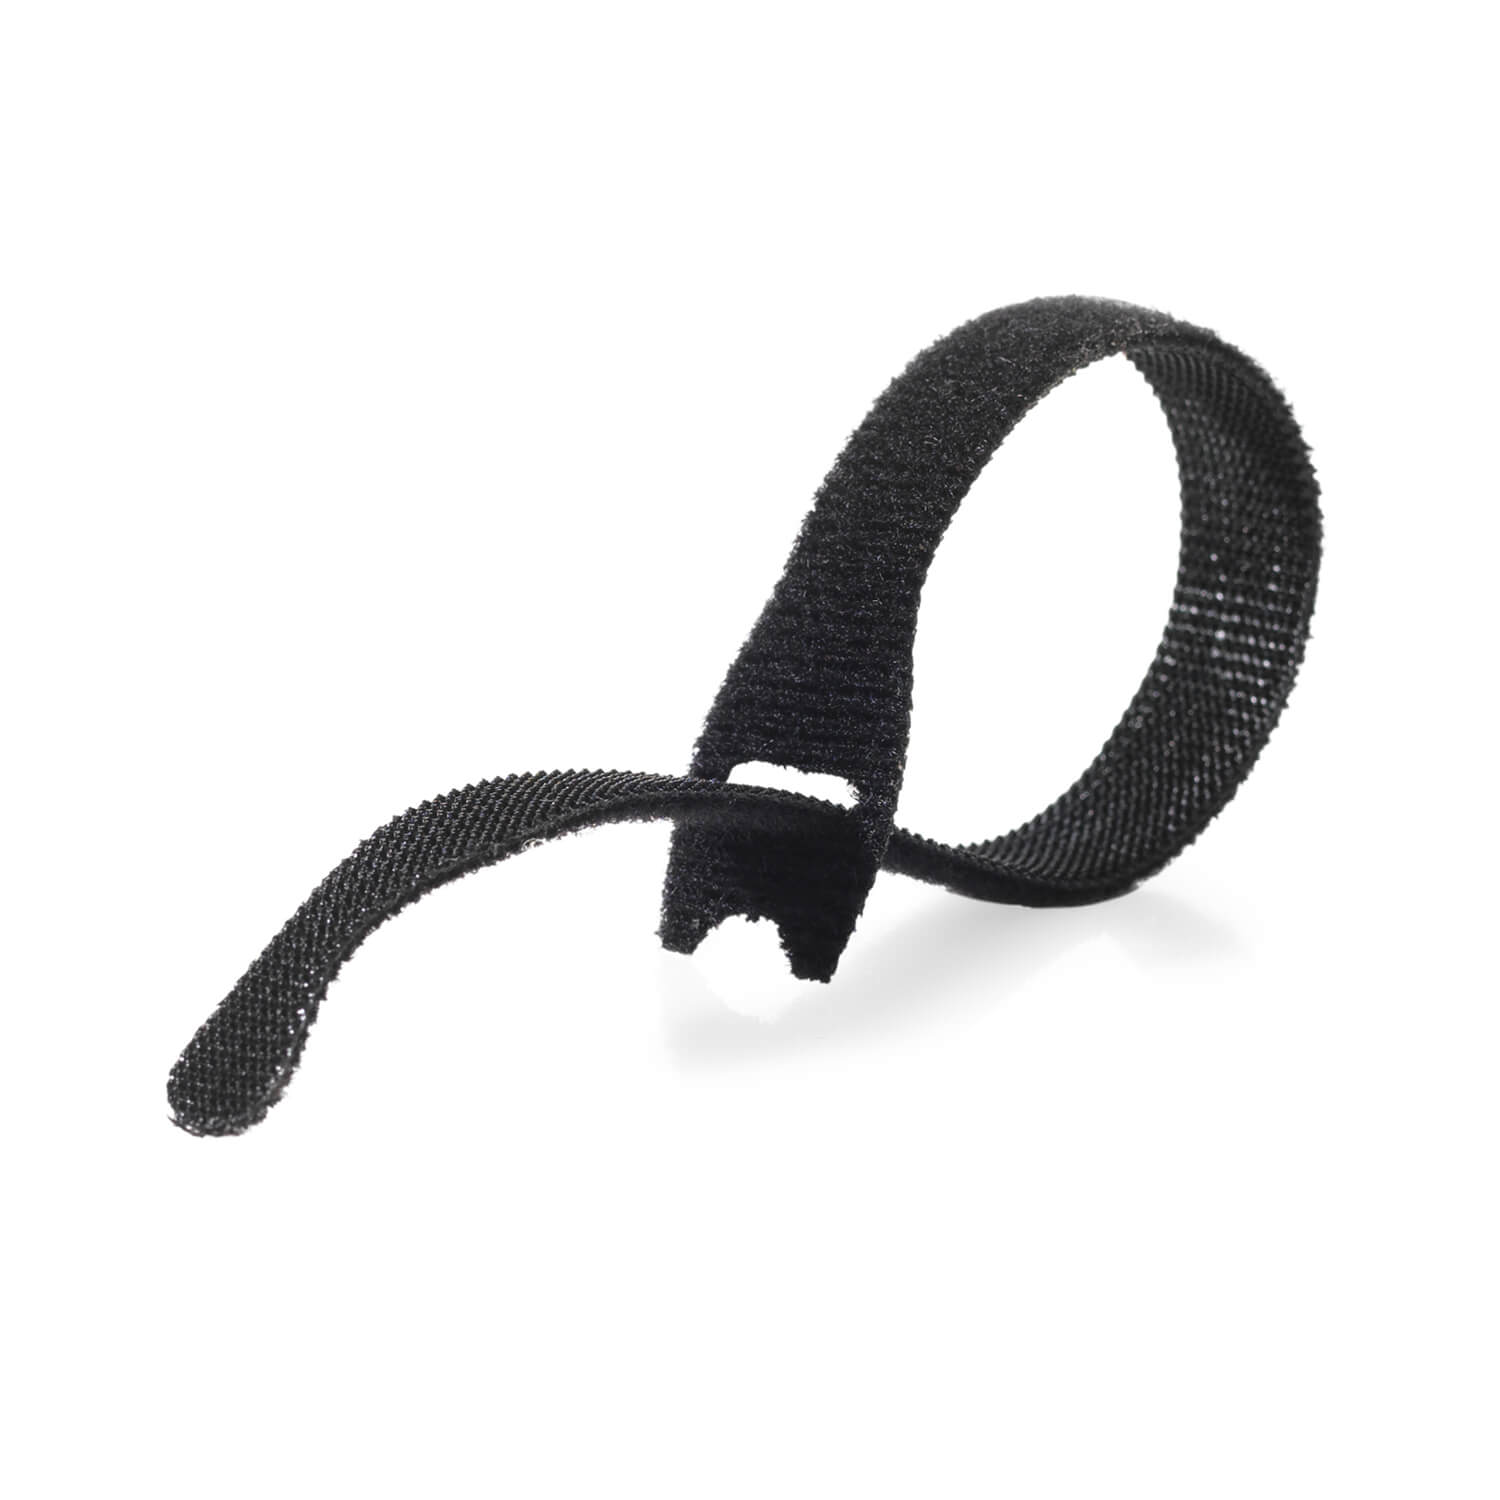 https://www.hookandloopfasteners.co.uk/fasteners/ONE-WRAP-Black-Ties-c.jpg